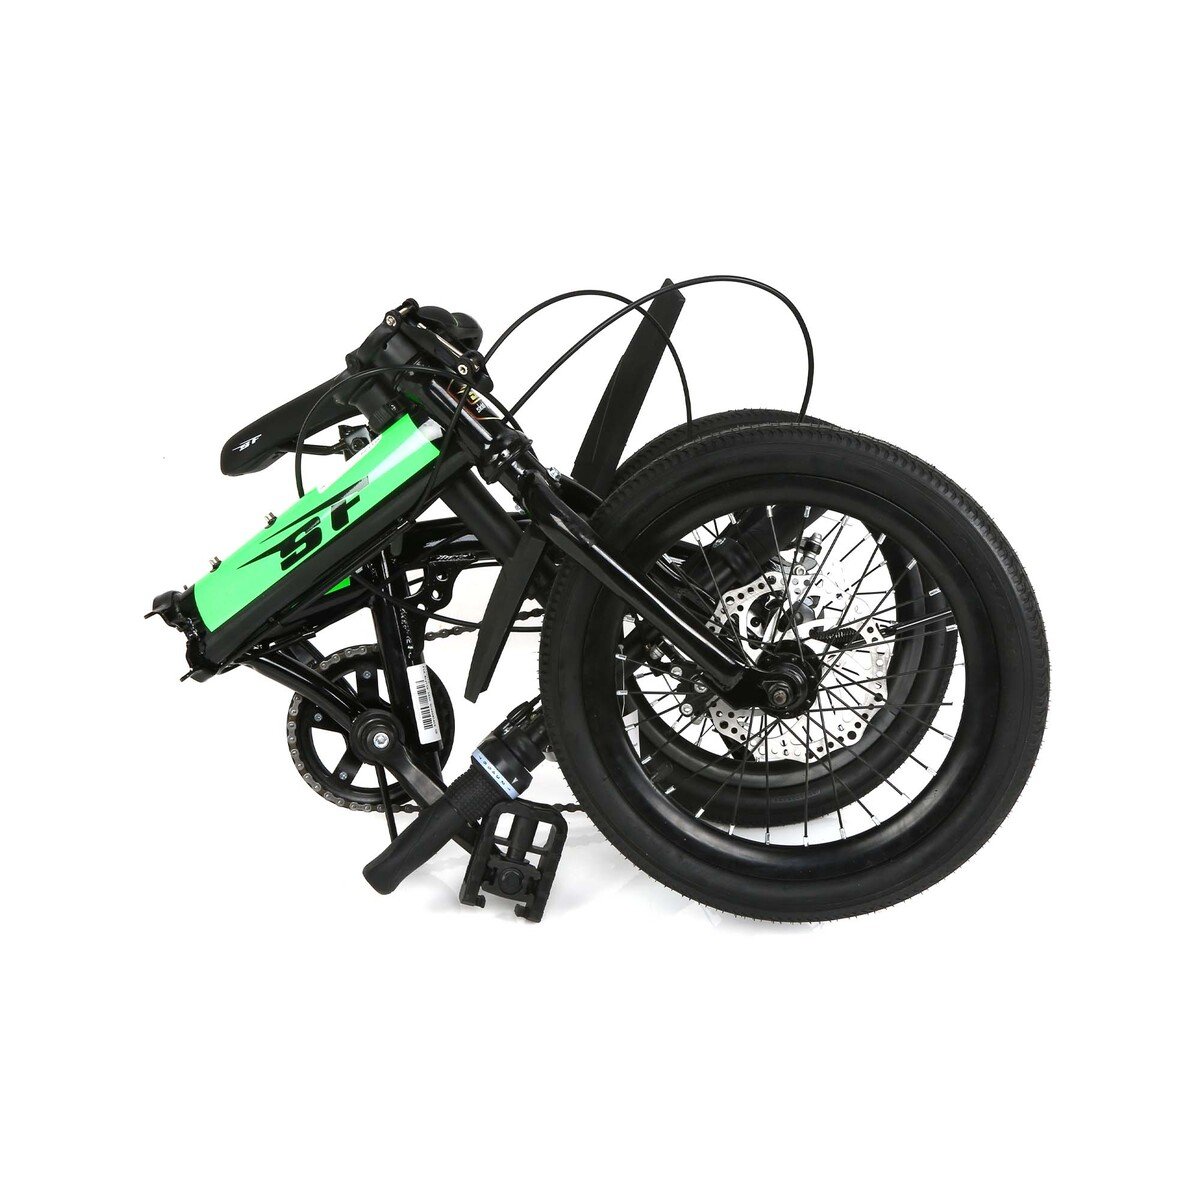 Skid Fusion Folding Bicycle 16" Green Black GB